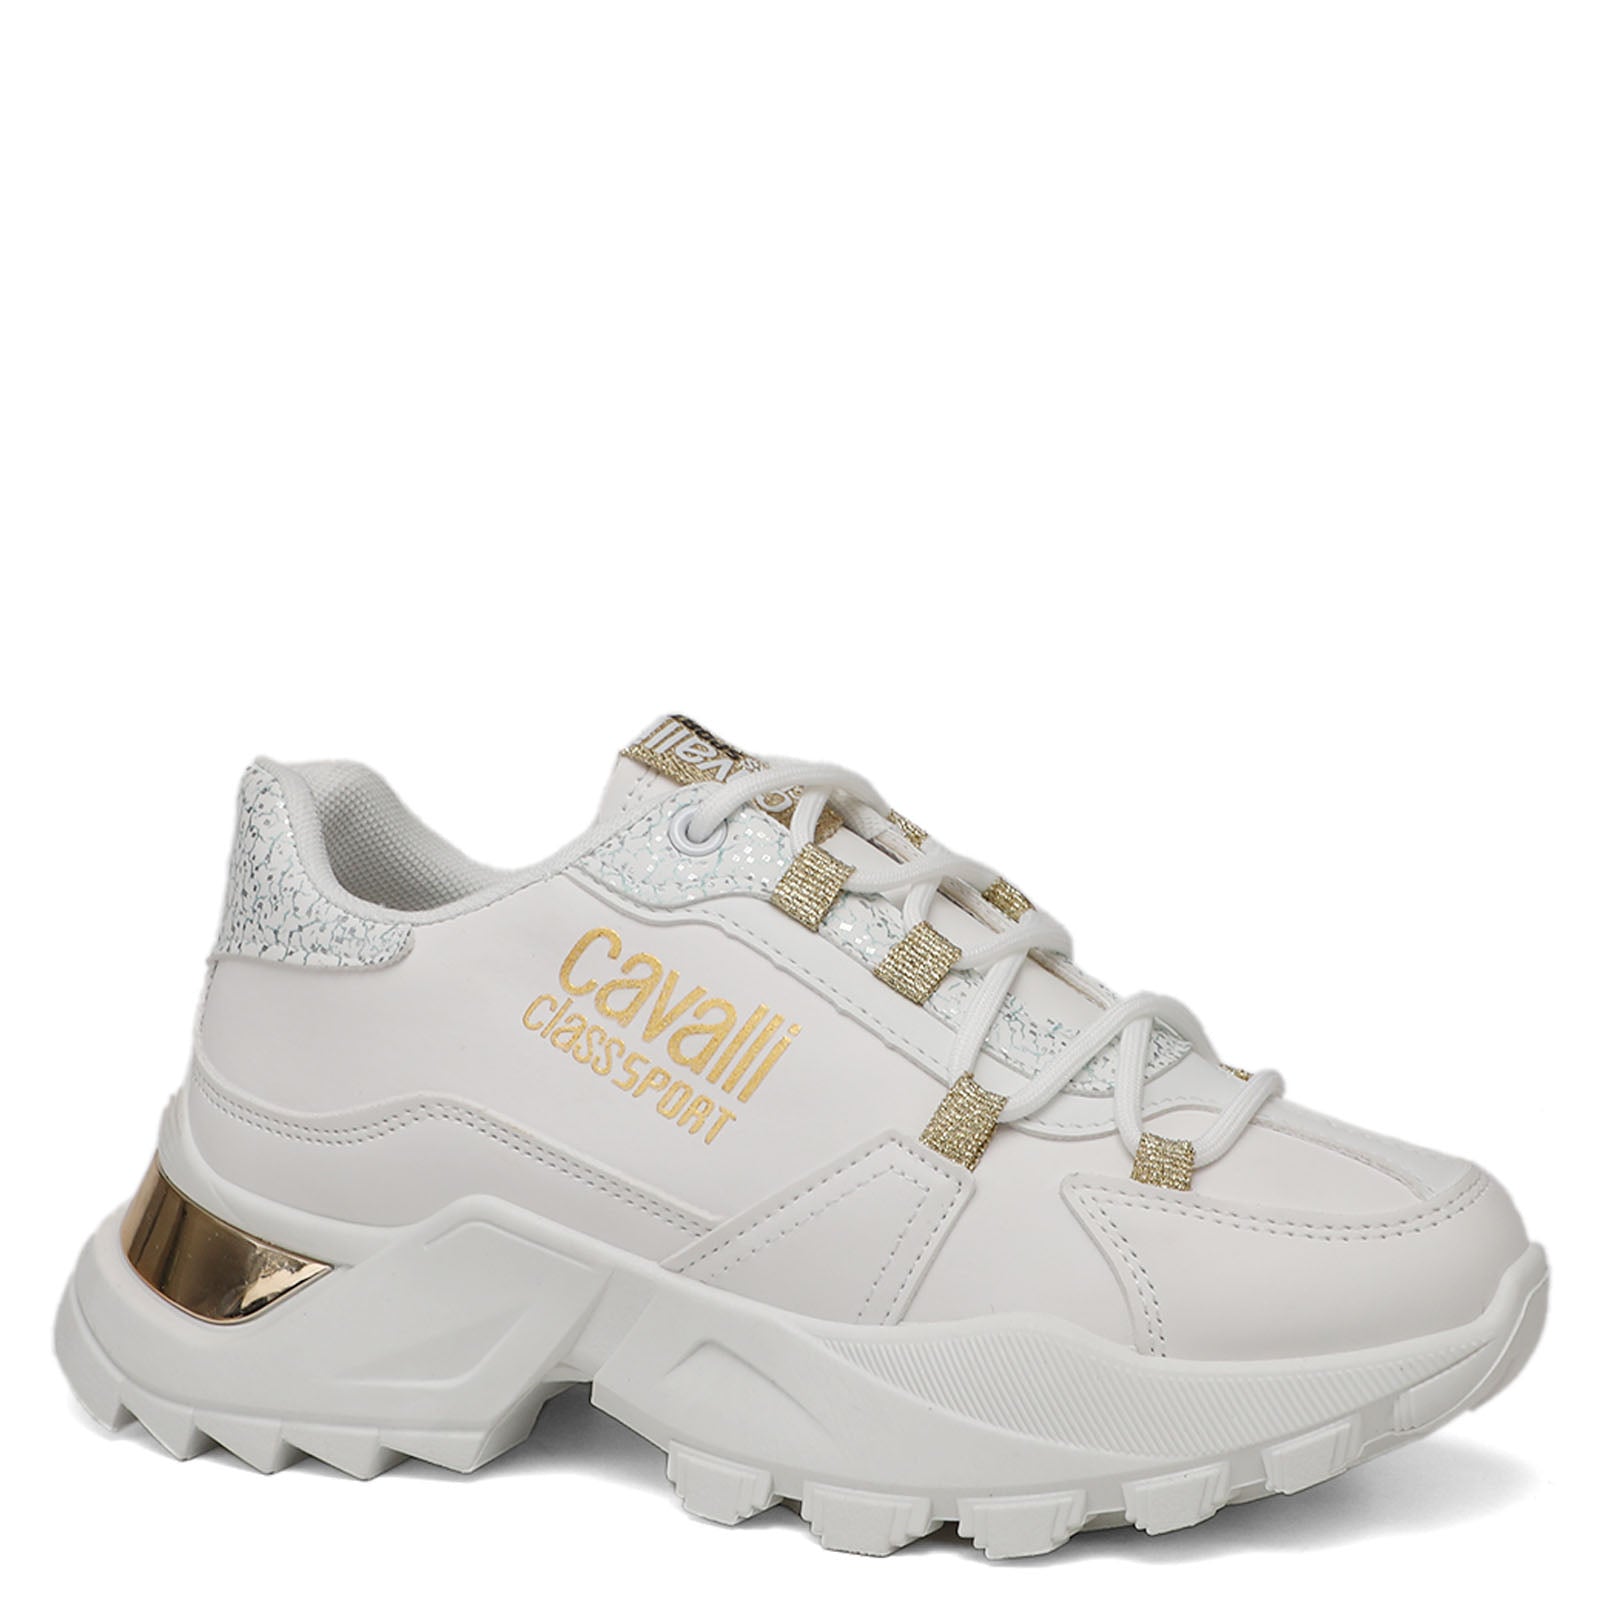 Cavalli Class sneakers